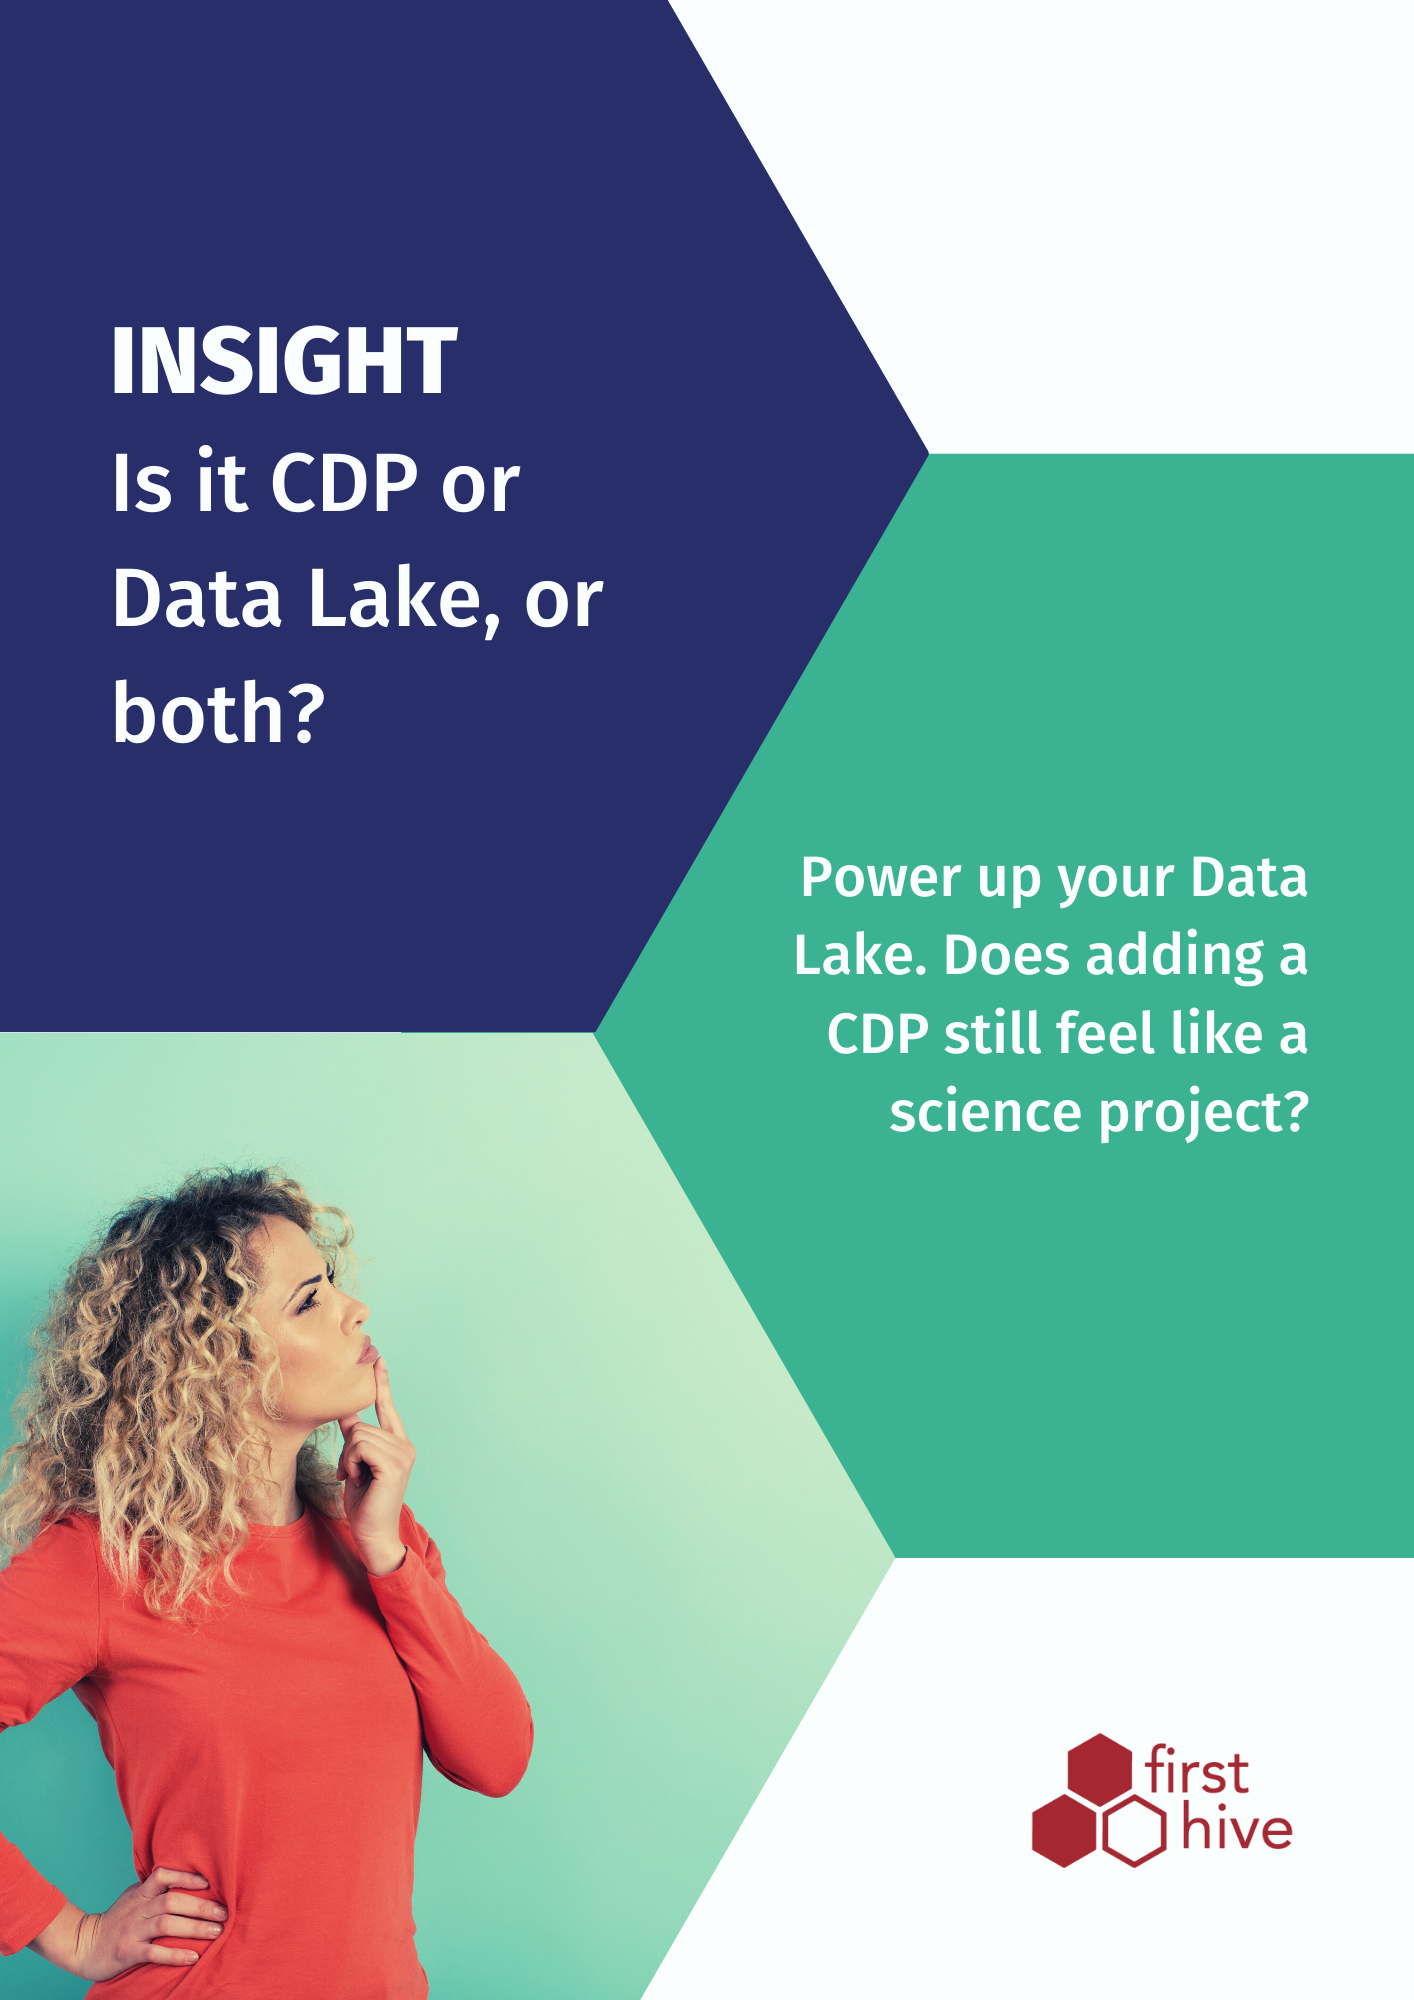 Data lake vs CDP